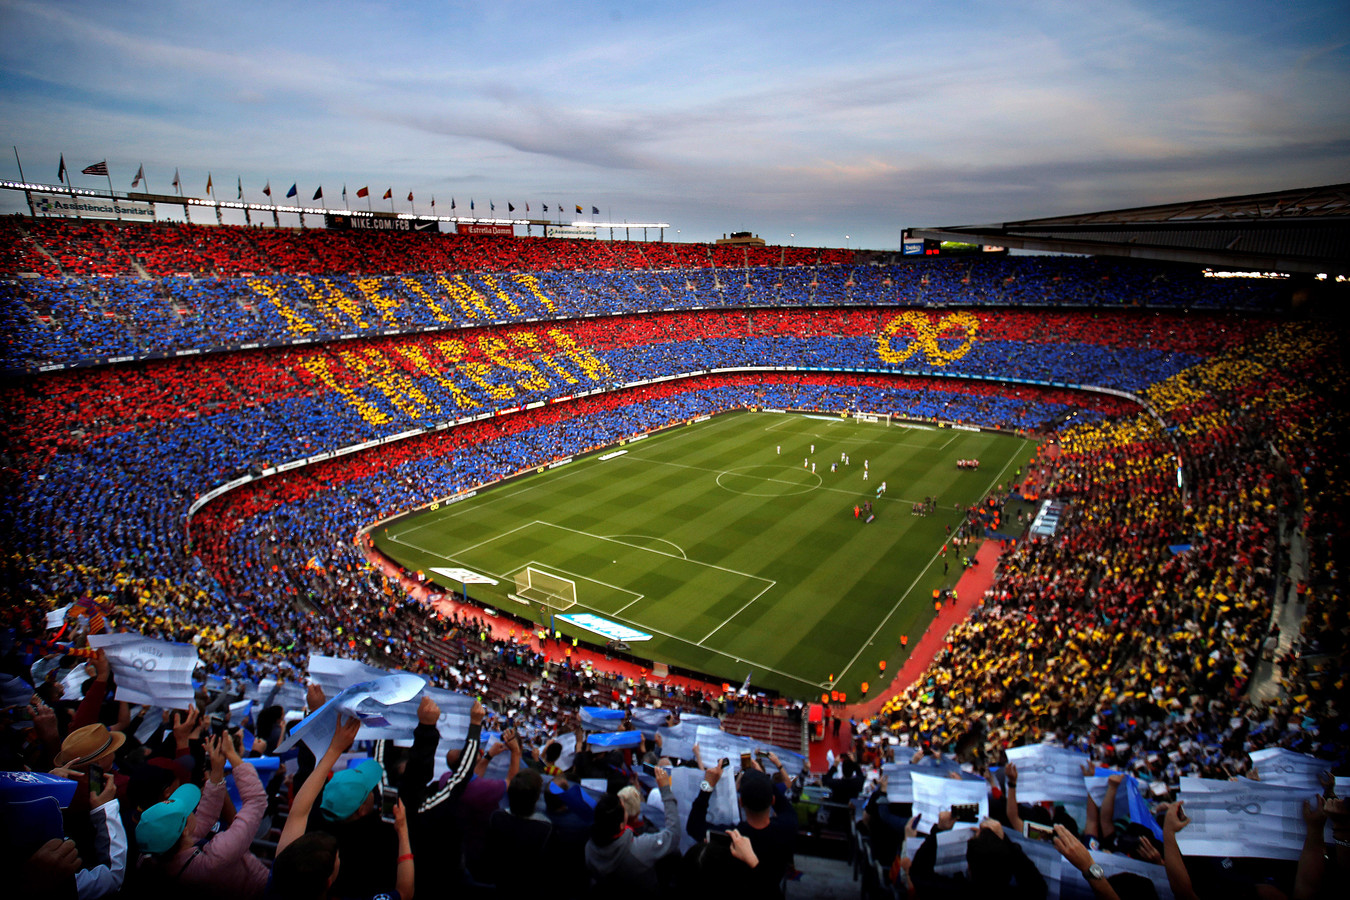 Camp Nou.